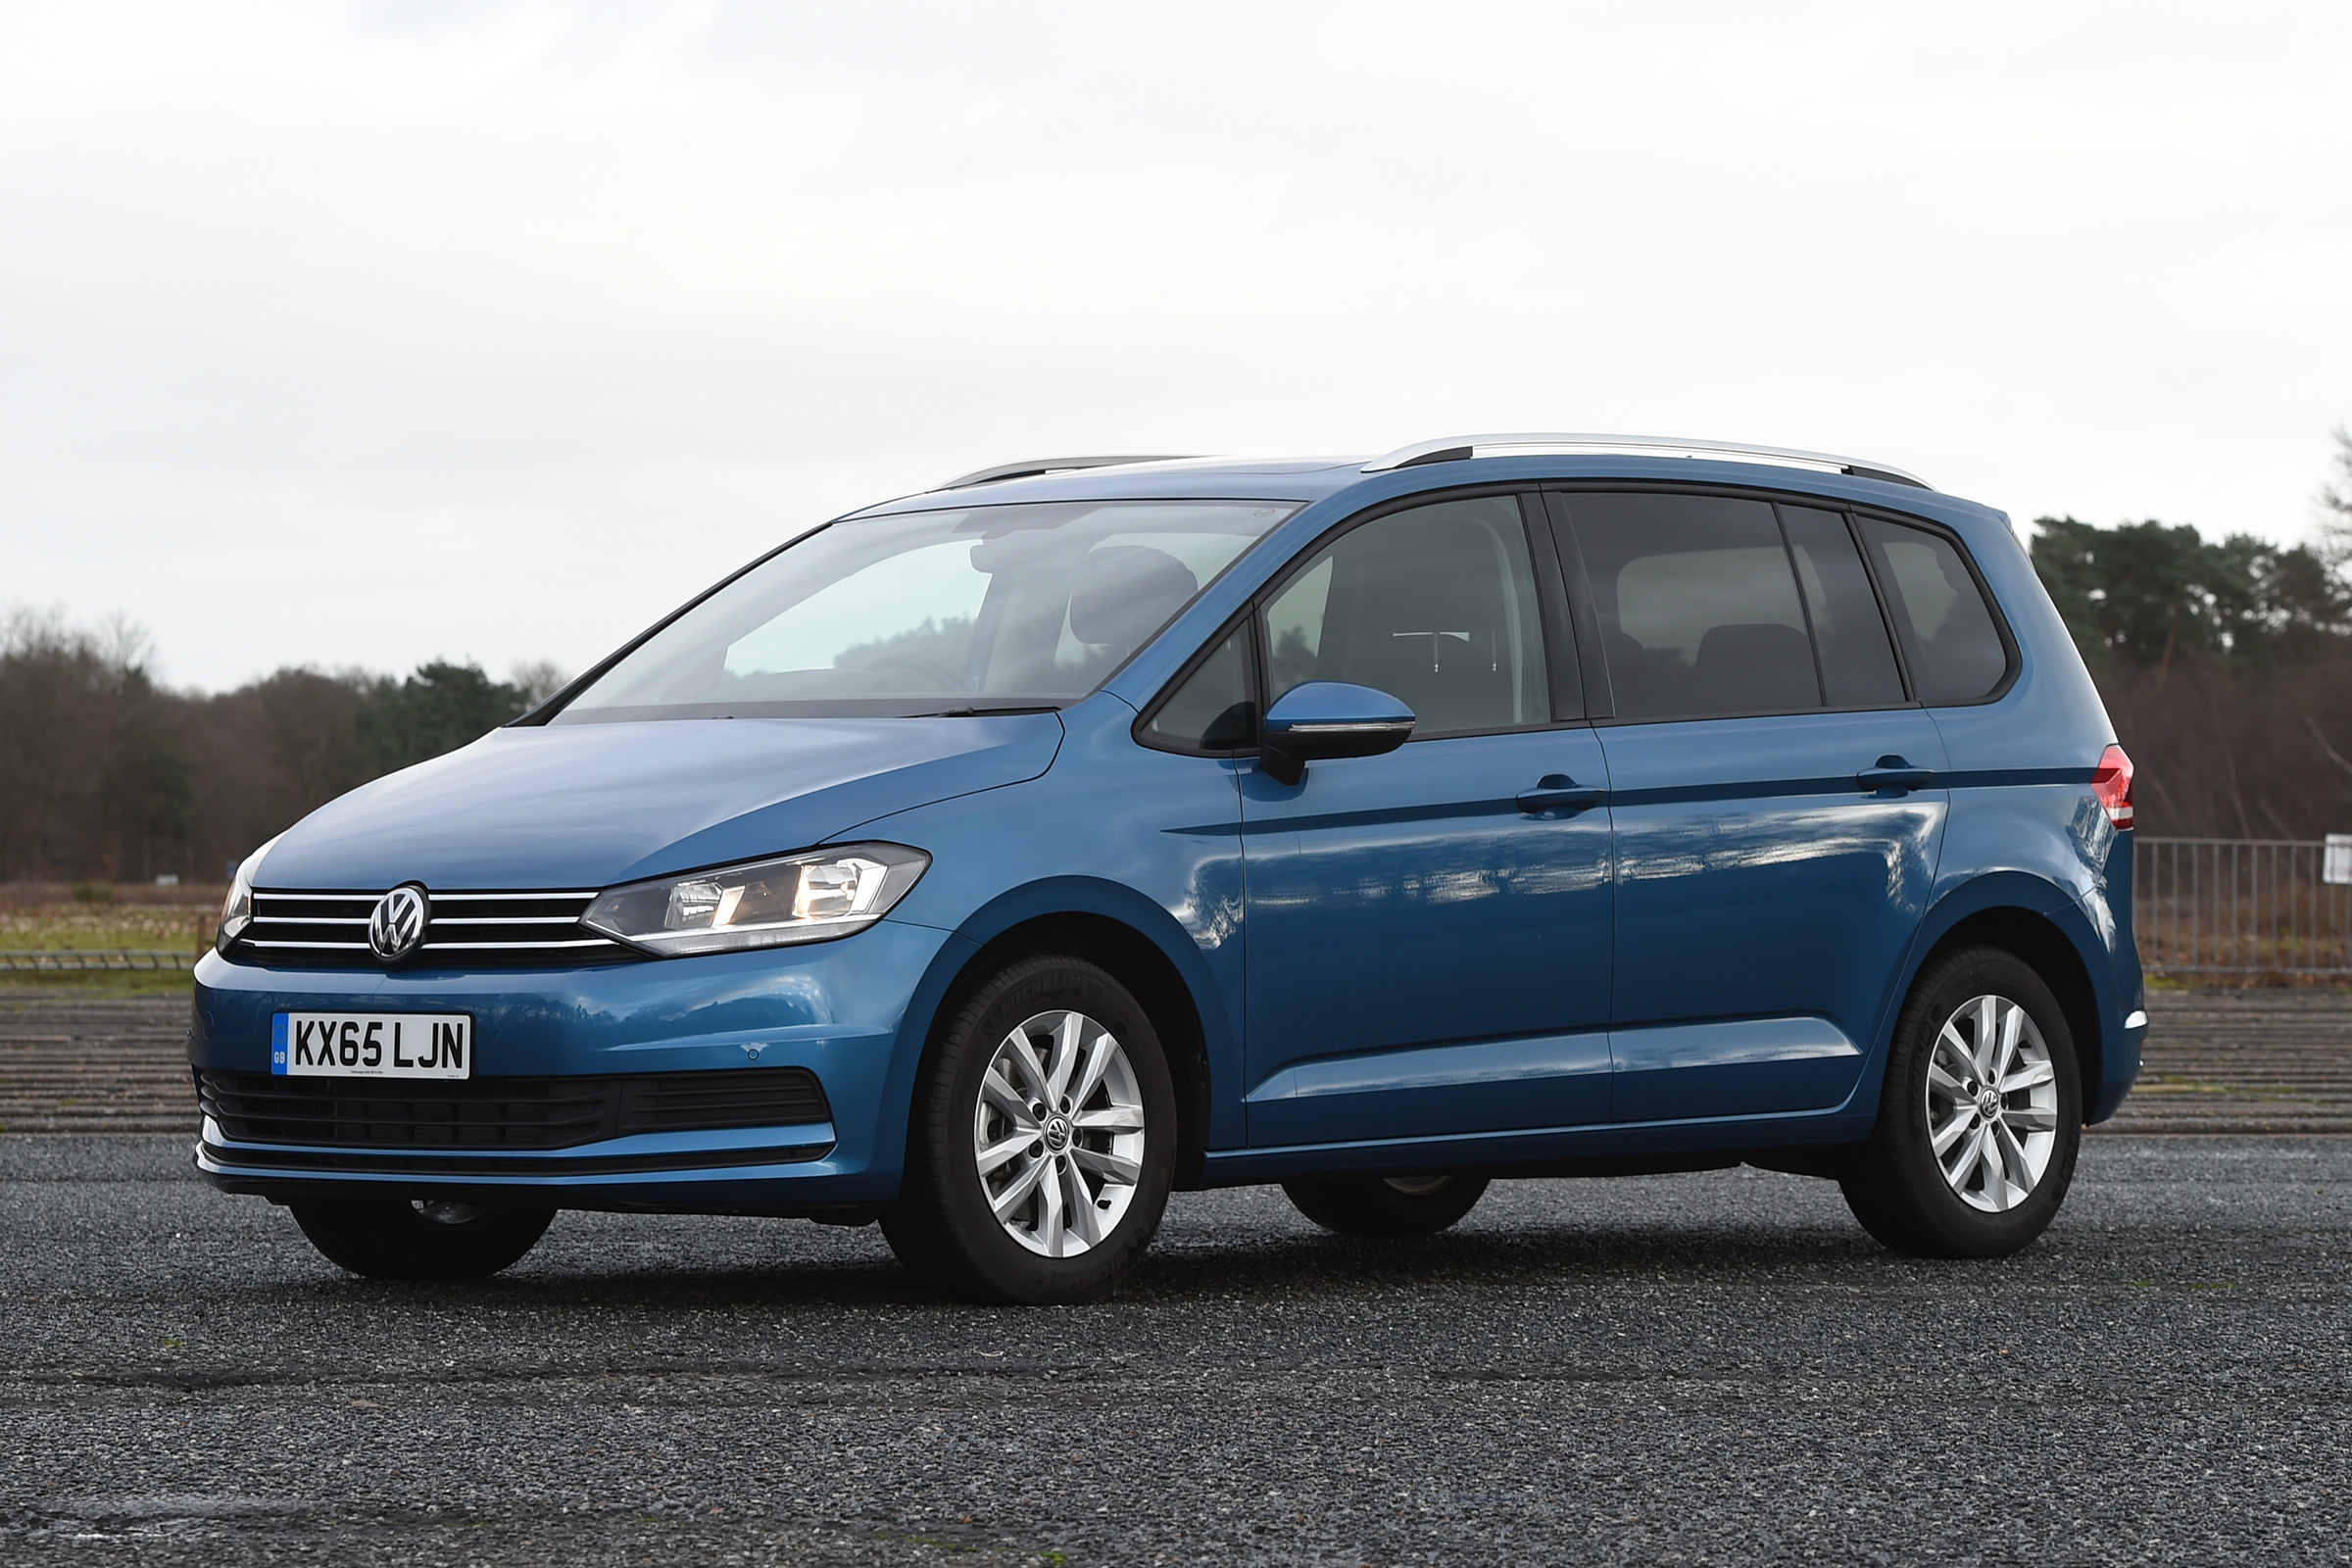 Used Volkswagen Touran buying guide 2015present (Mk2) Carbuyer